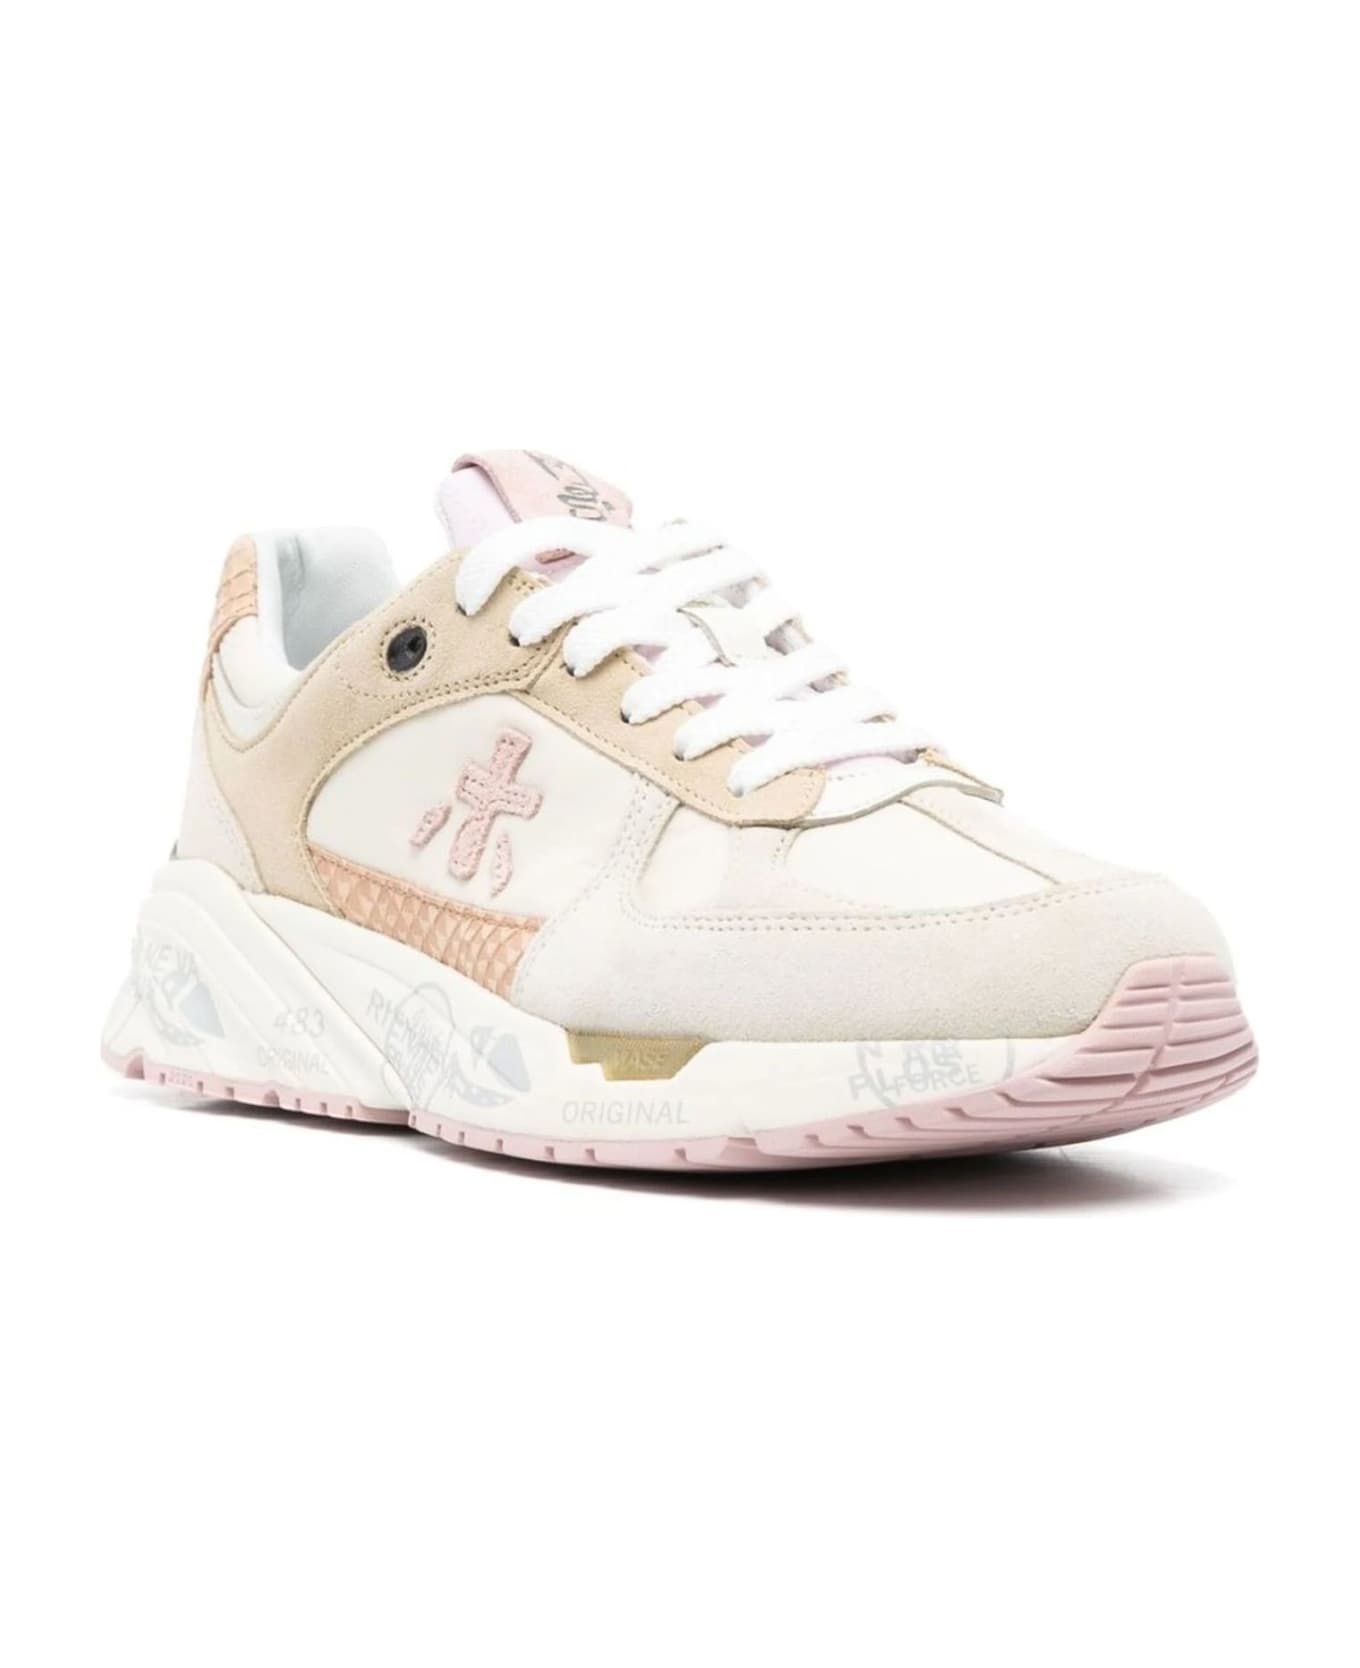 Premiata Sneakers Pink - Bianco beige rosa